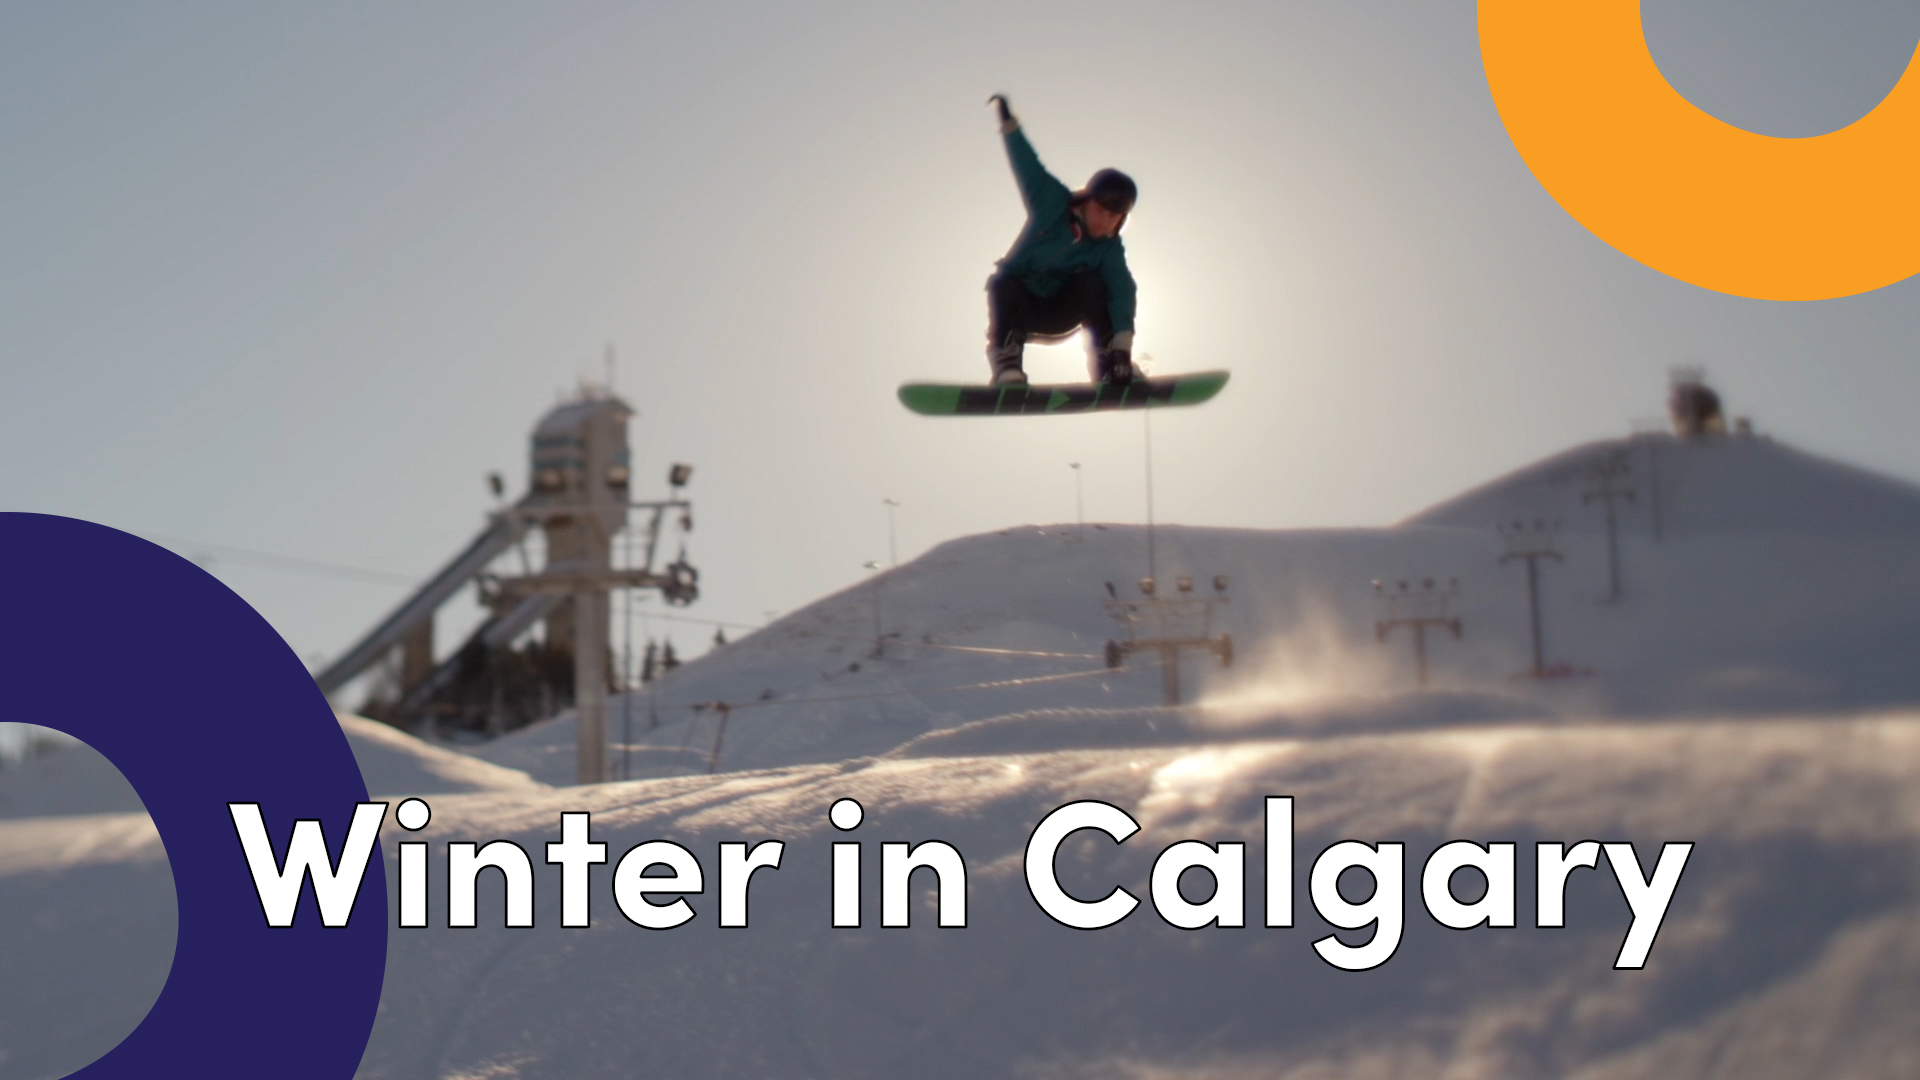 Winter in Calgary YouTube video